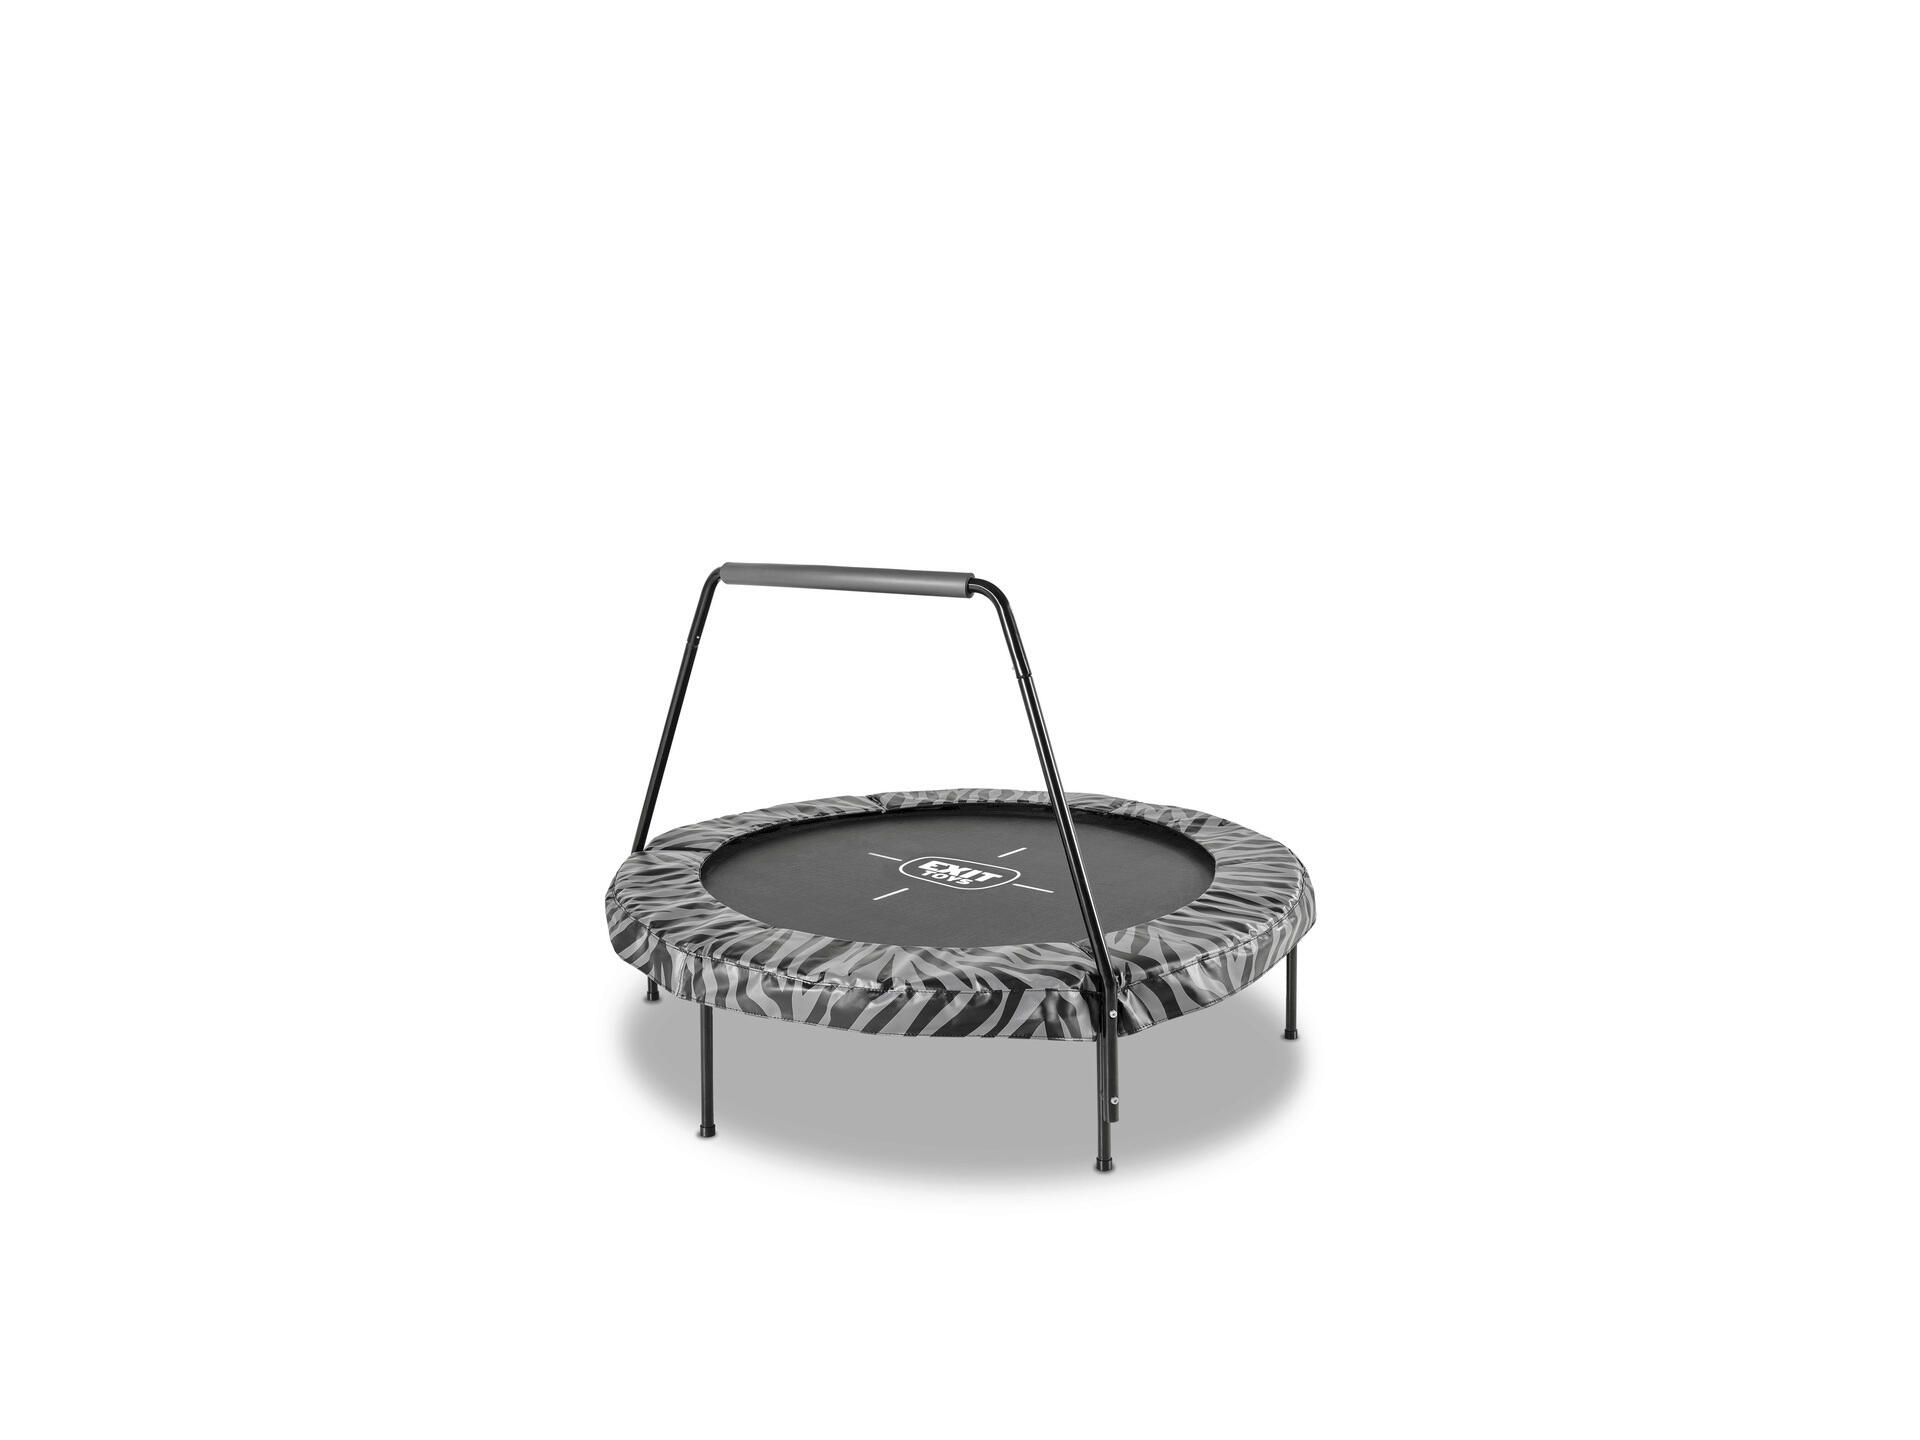 Exit Toys Tiggy Junior trampoline 140cm + support noir/gris